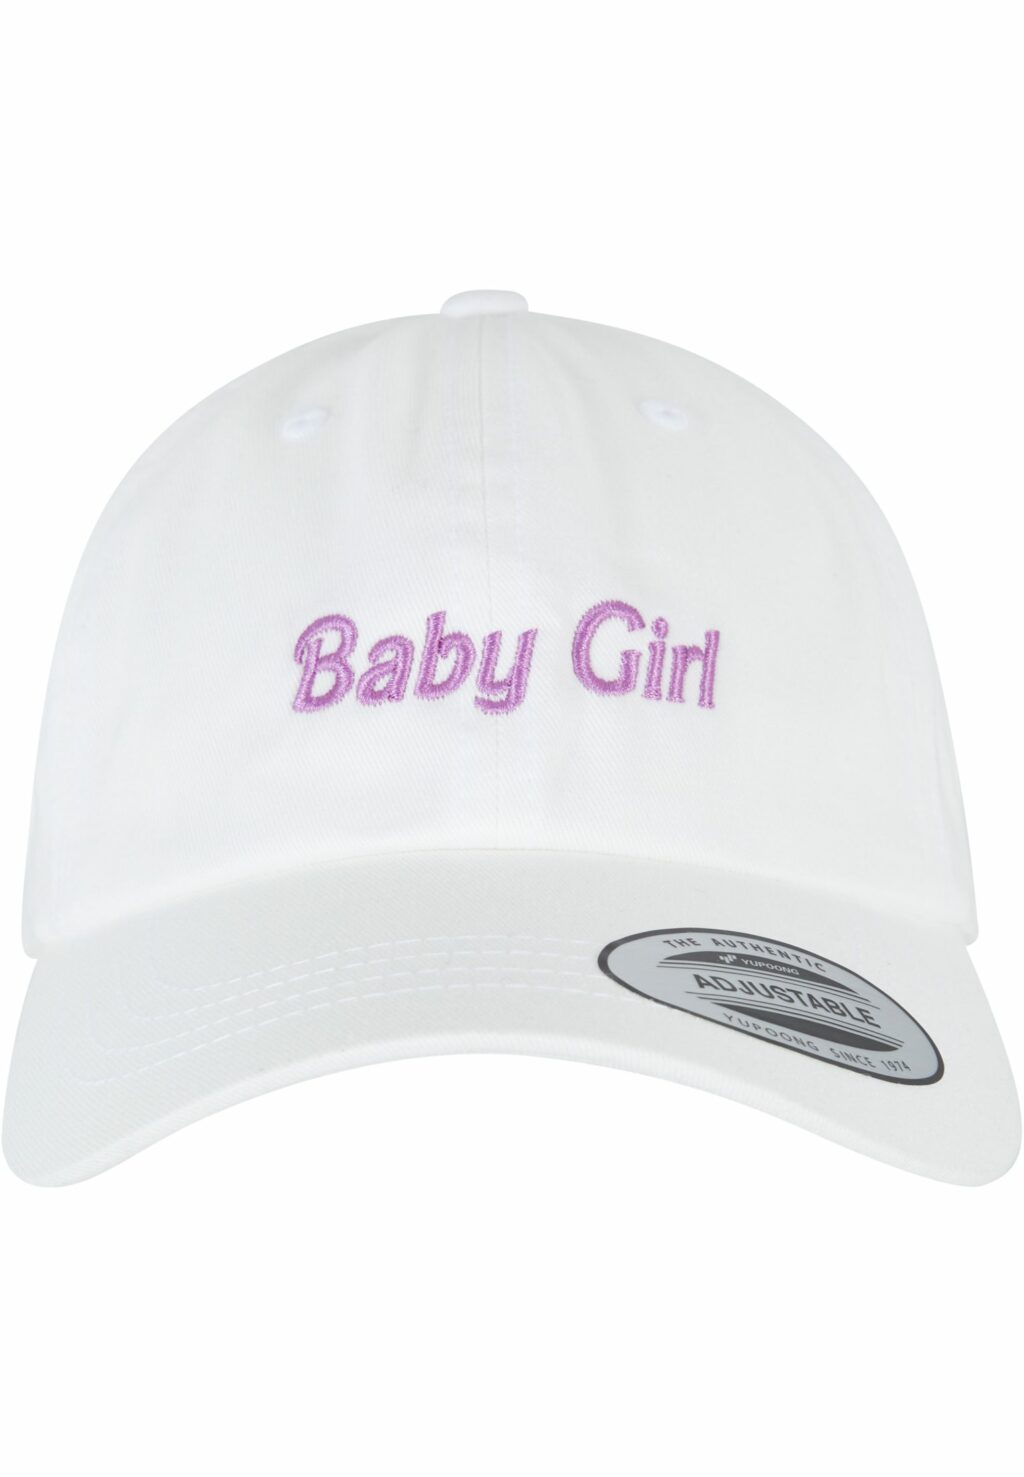 Baby Girl Cap  white one BE072